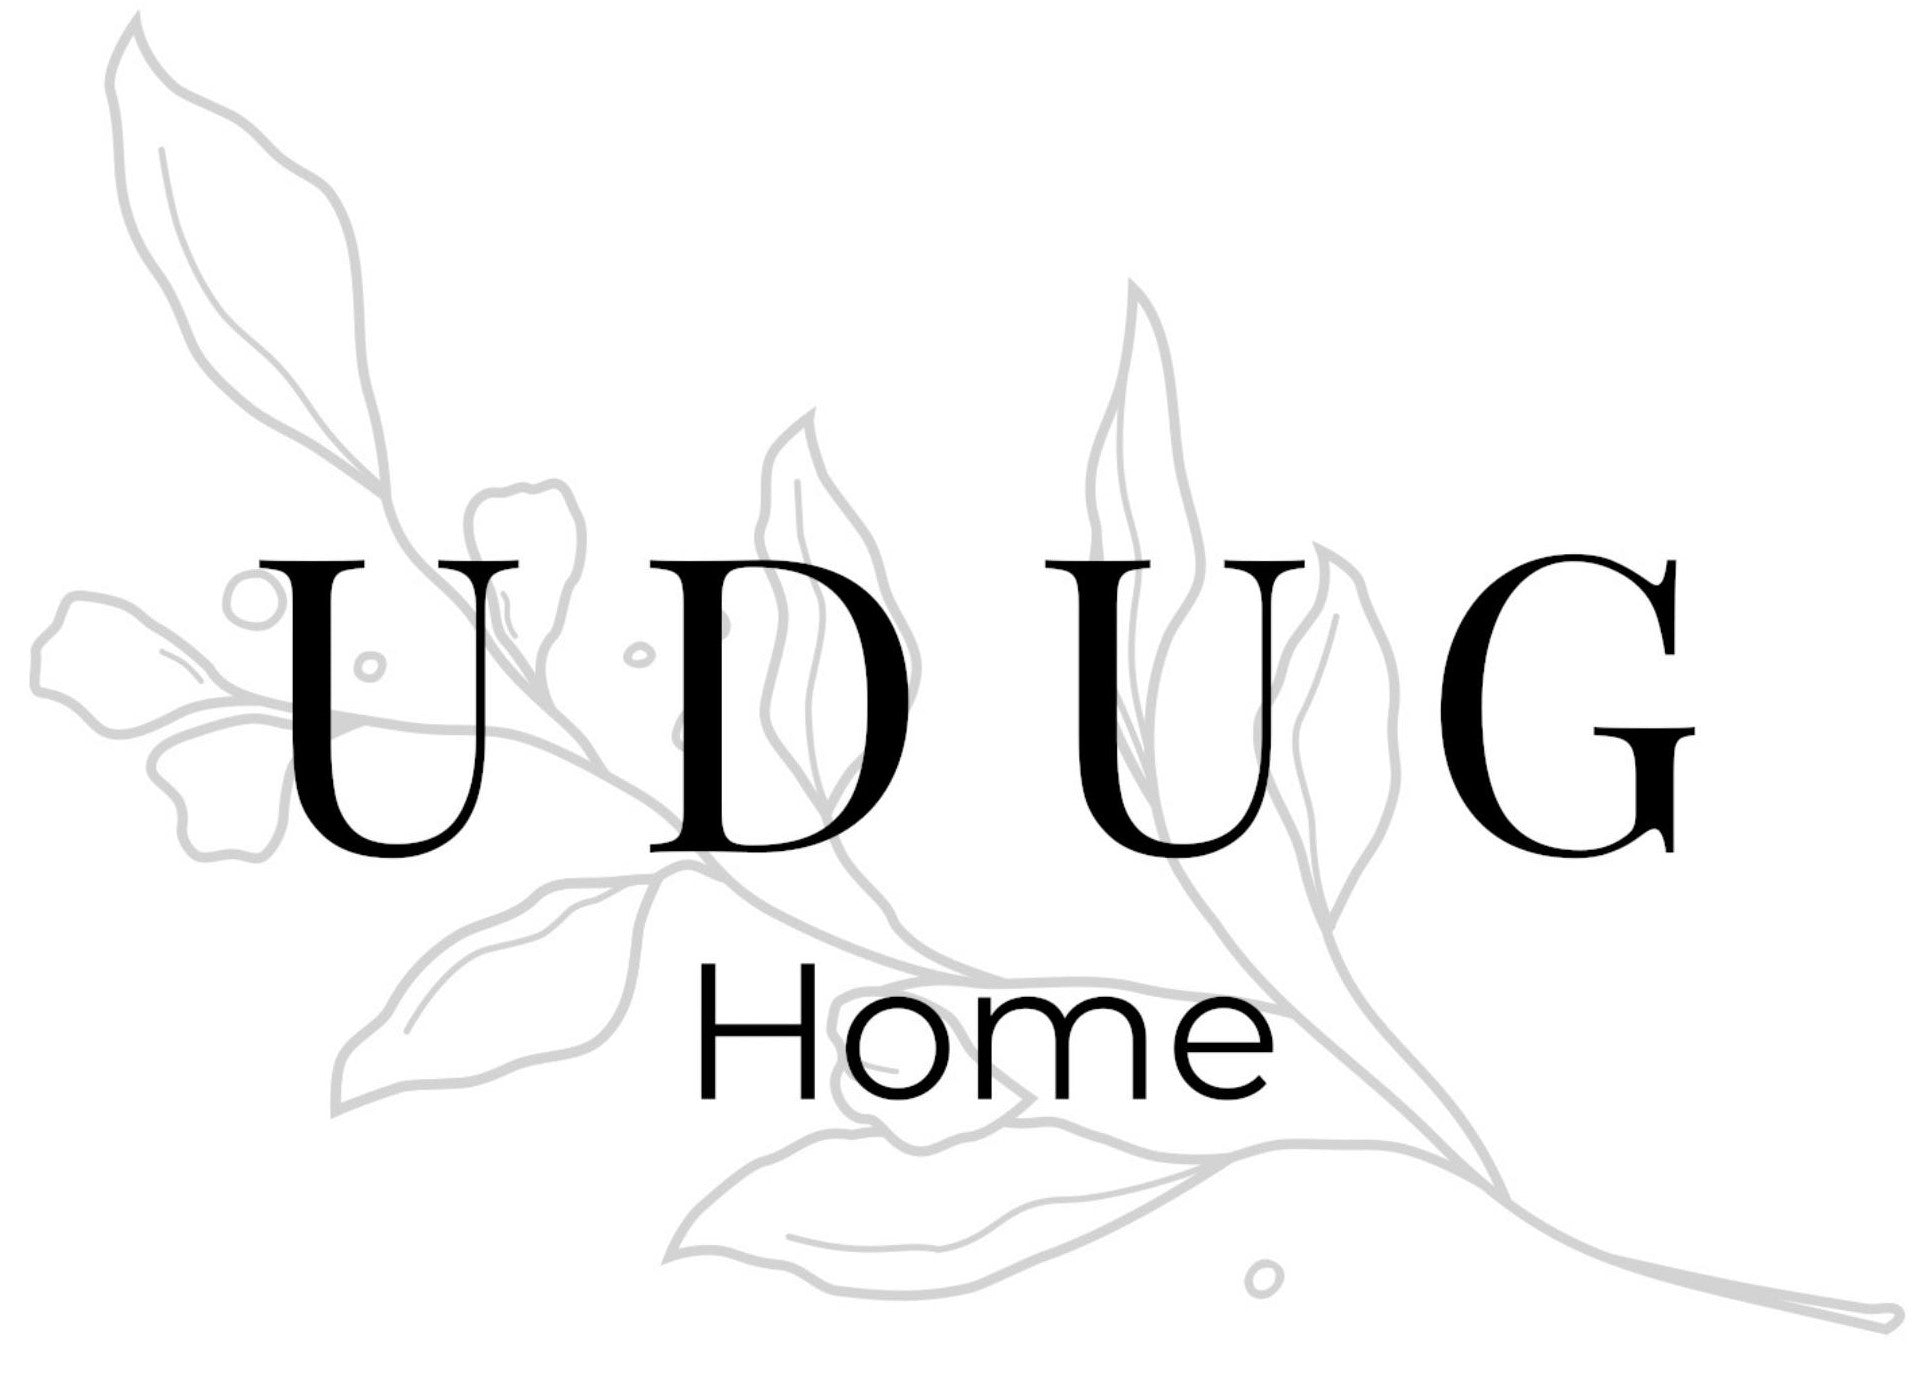 Products – UDUG Home